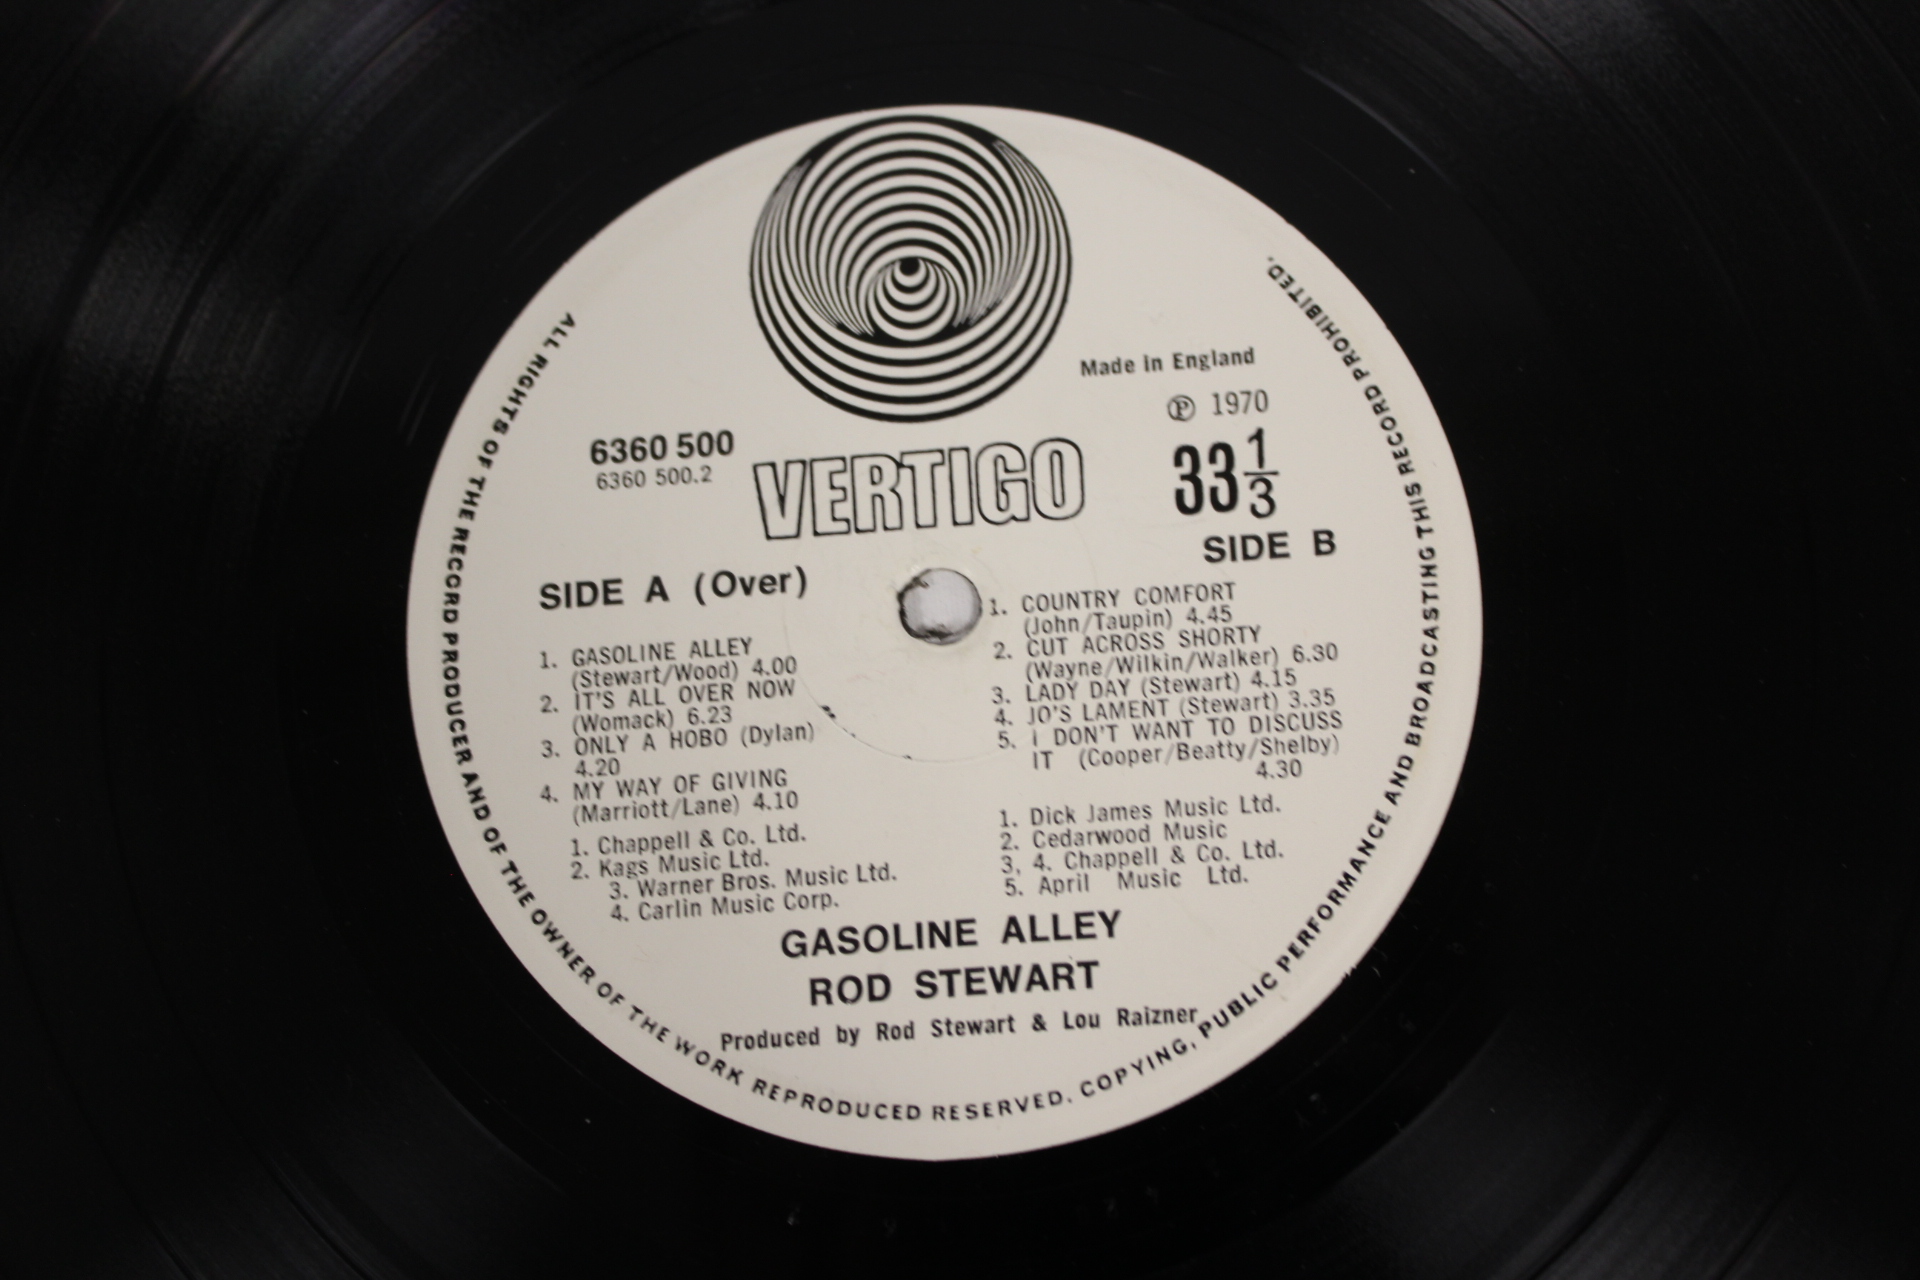 Rock/Pop LPs to include Rod Stewart of swirl Vertigo, Gnidrolog (lattice sleeve), Roy Wood, Hollies, - Image 10 of 11